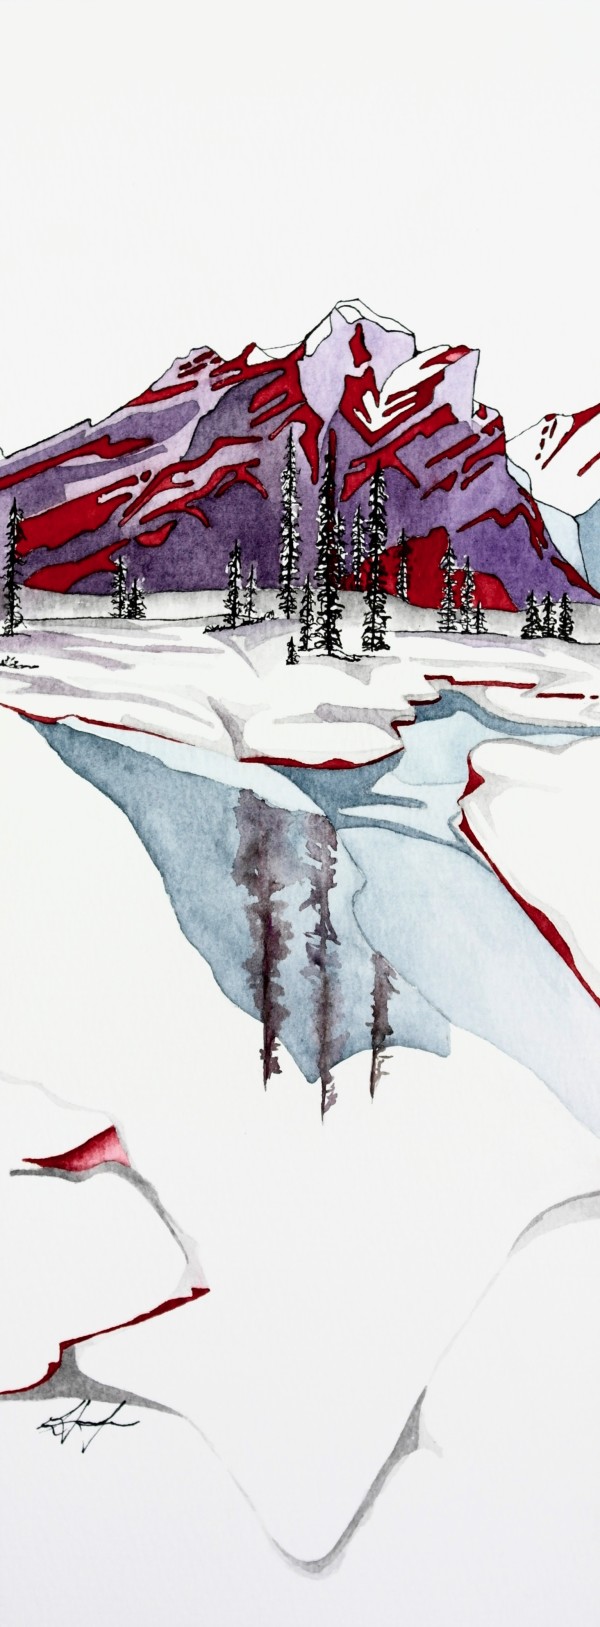 the First frost **| Mt.Kidd by Linnea Martina  Hannigan